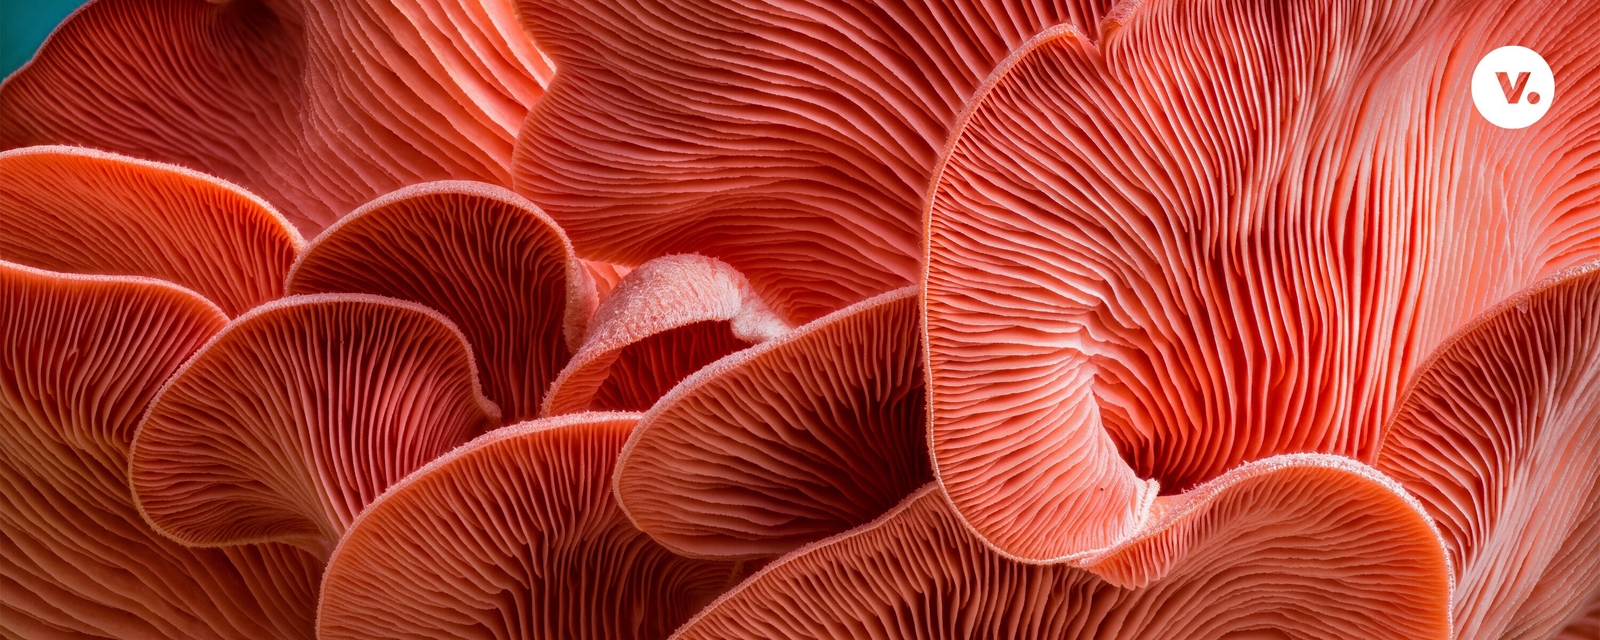 medicinal-mushrooms-benefits